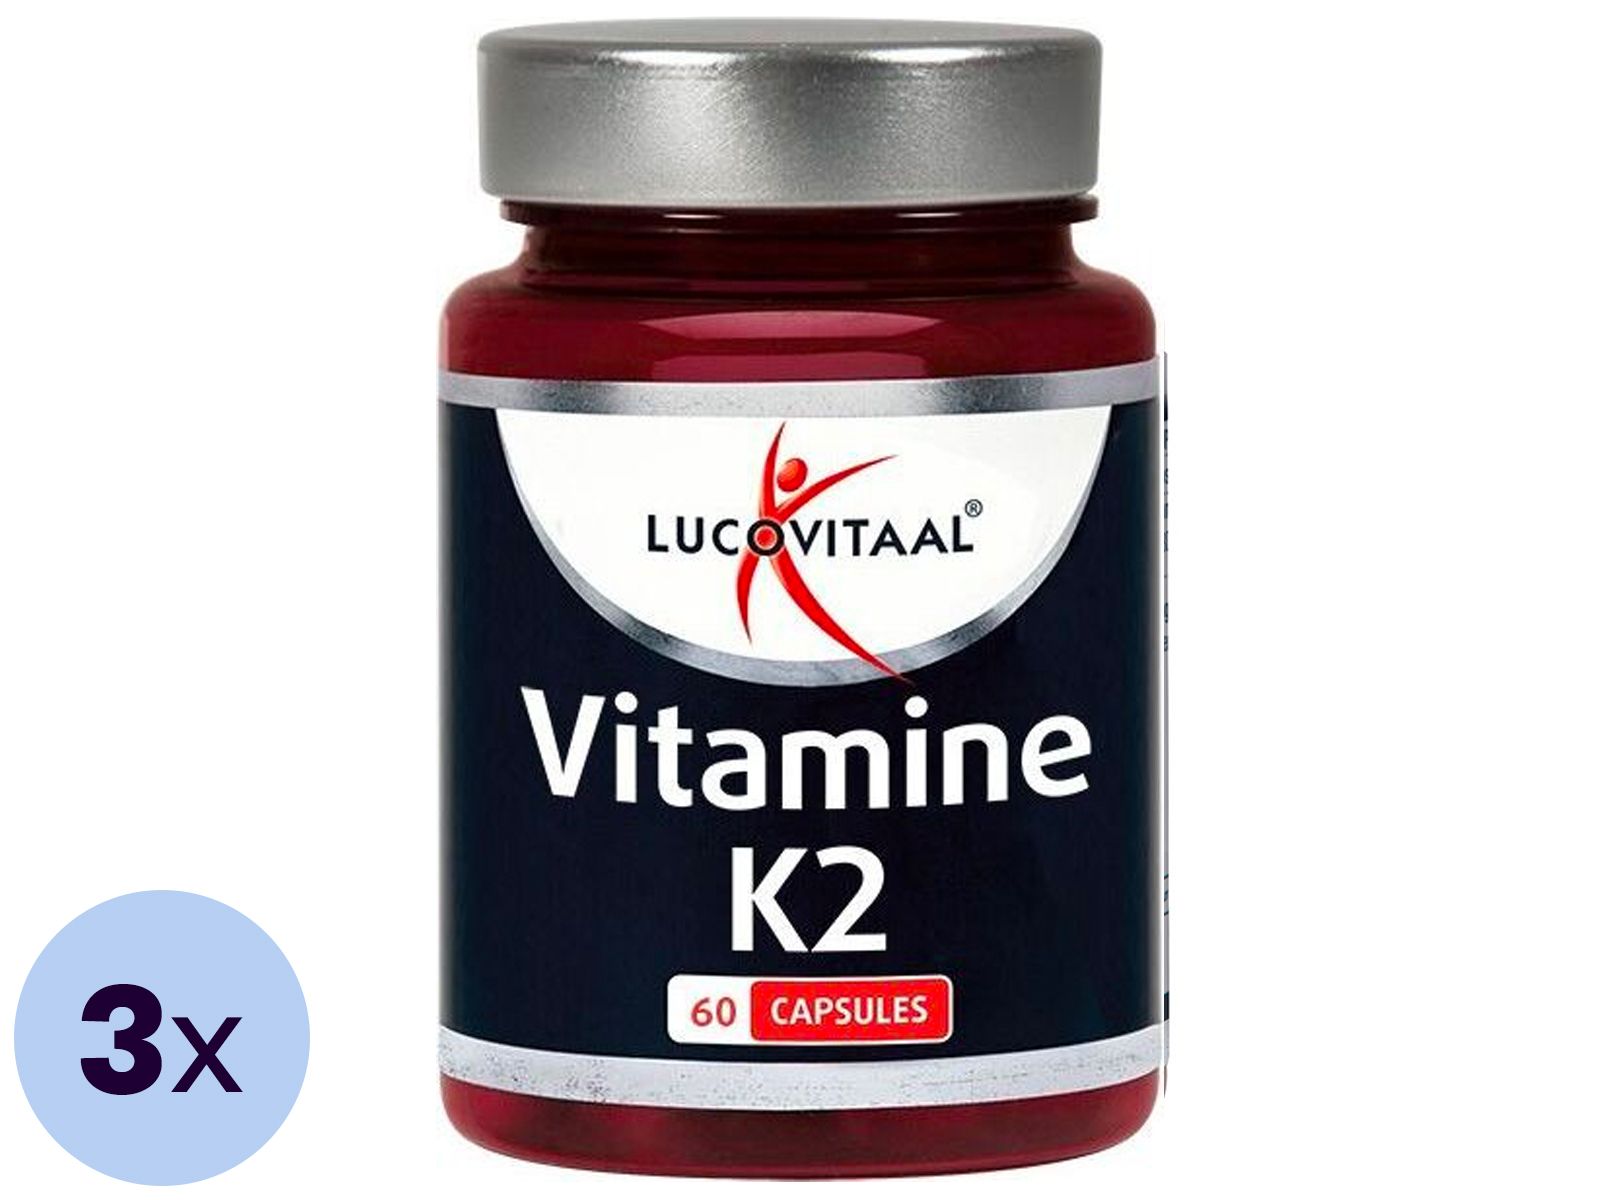 180x-lucovitaal-vitamin-k2-kapsel